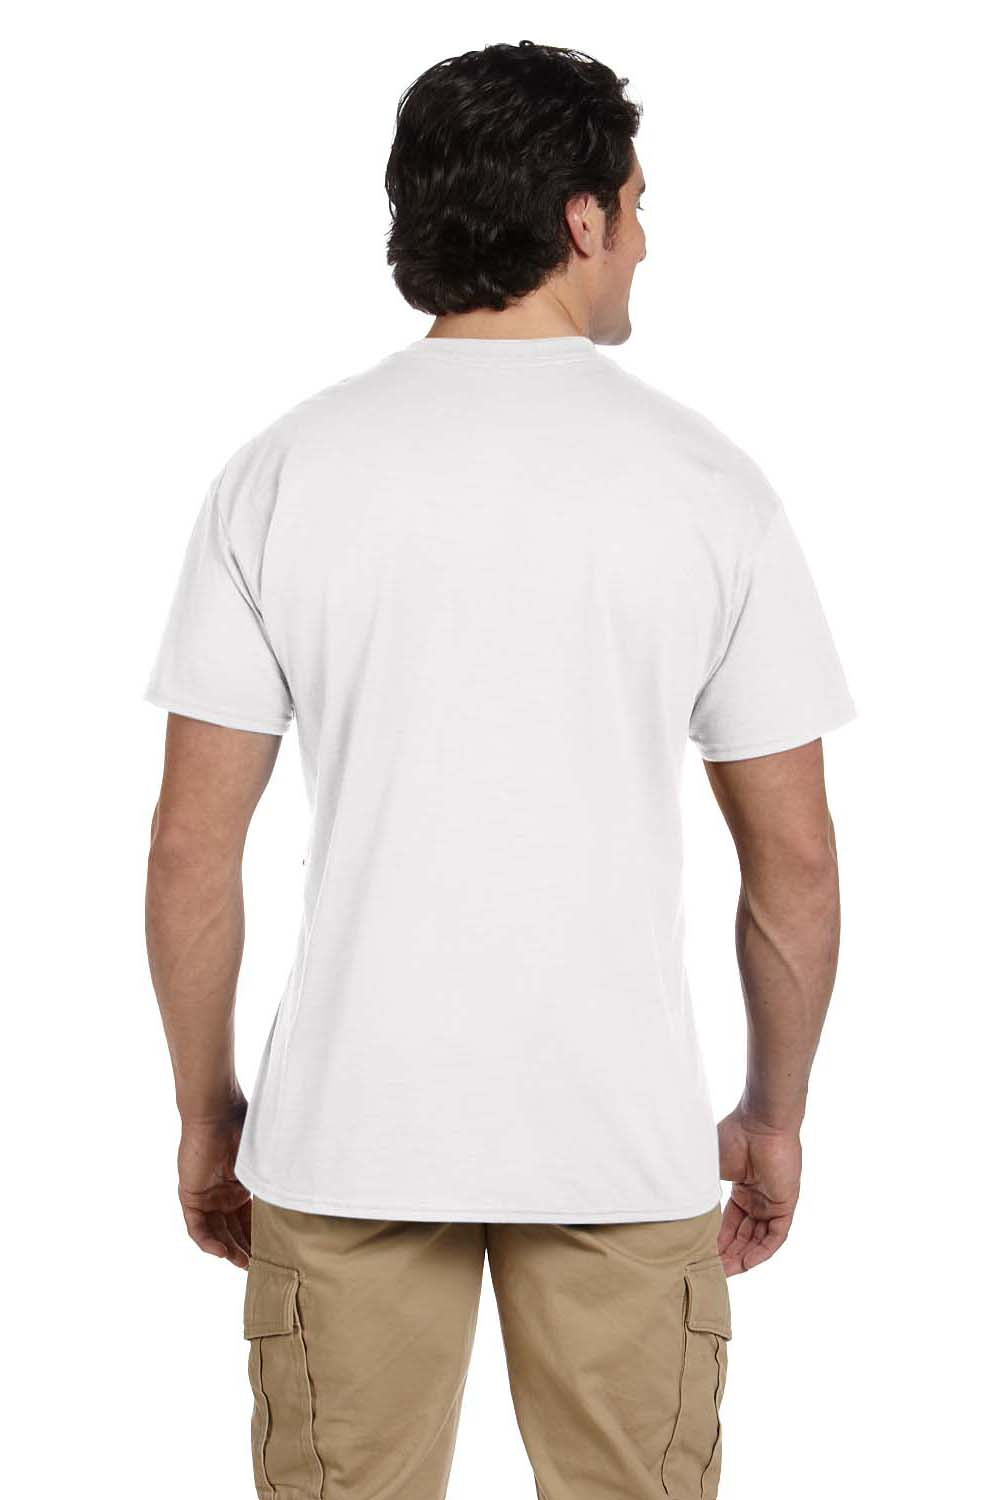 Gildan G830 Mens DryBlend Moisture Wicking Short Sleeve Crewneck T-Shirt w/ Pocket White Back